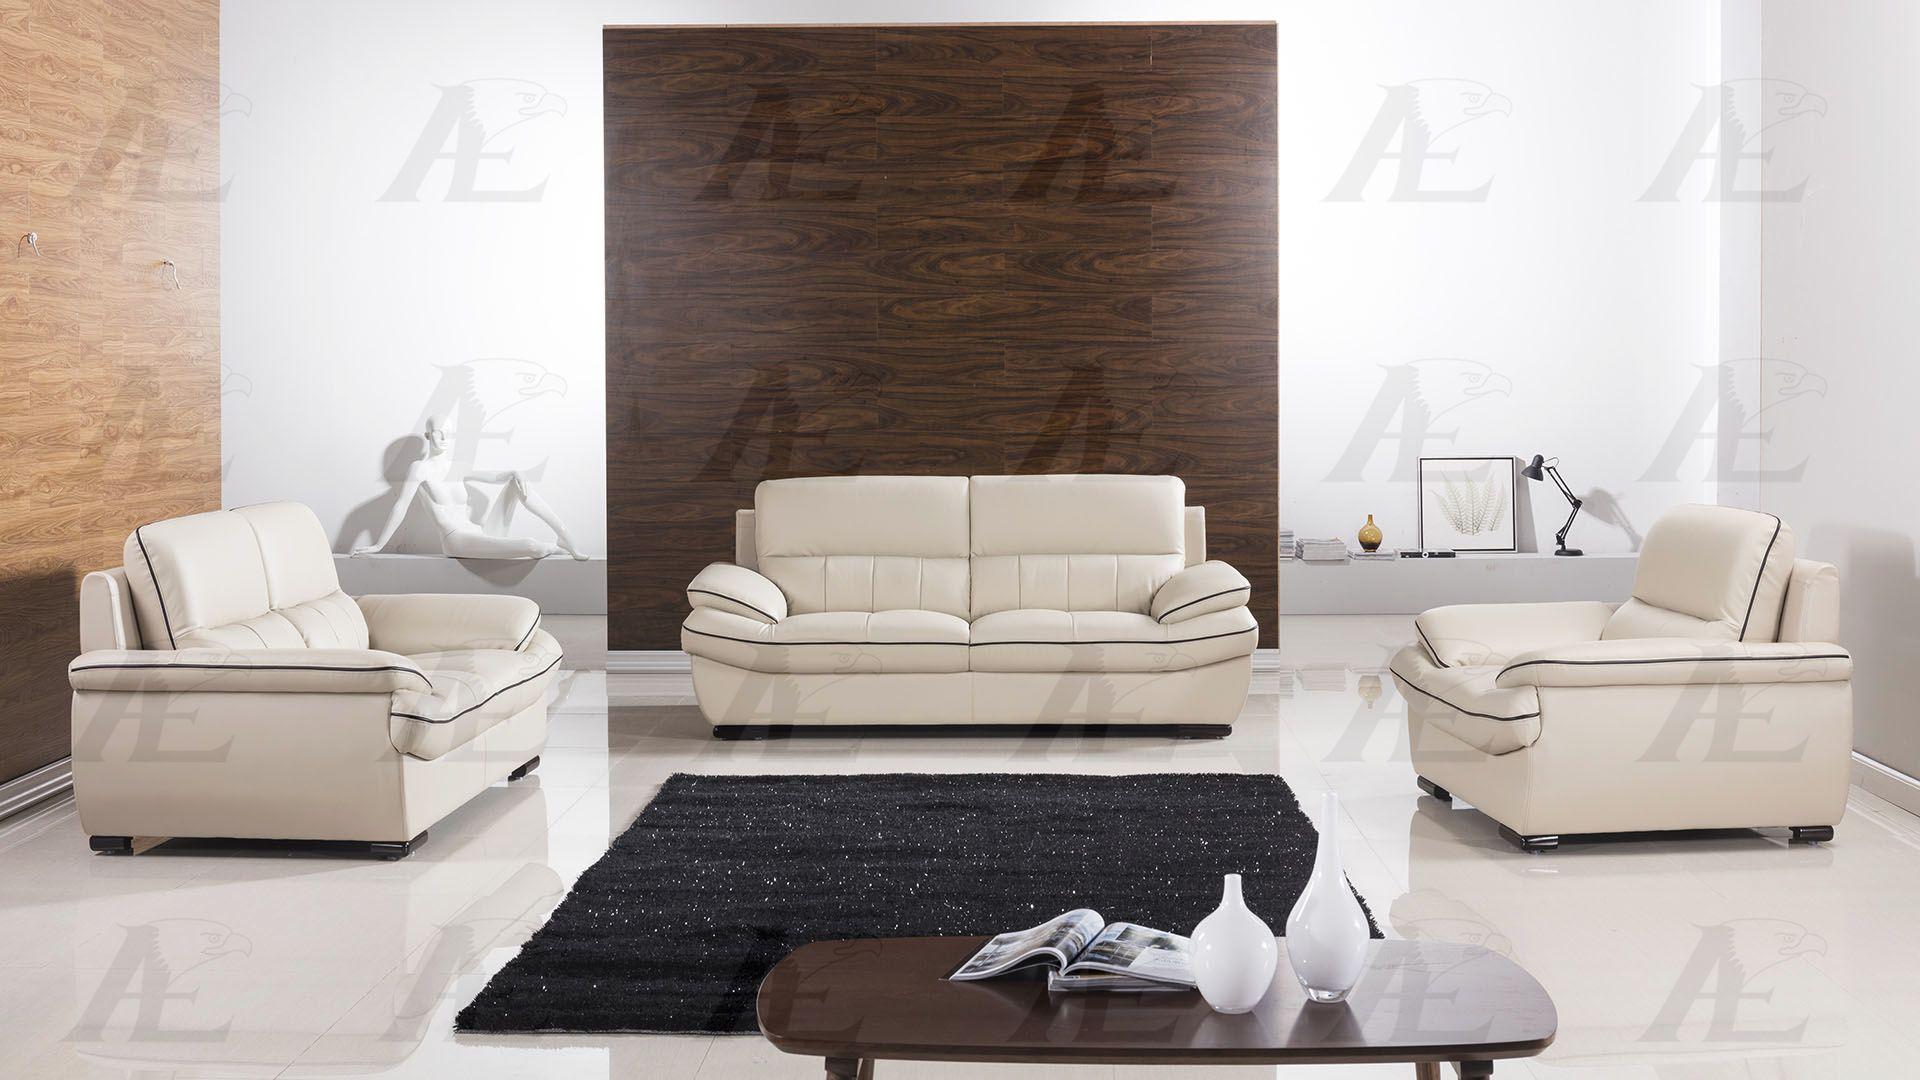 

    
American Eagle EK-B305 Light Gray Genuine Leather Living Room Sofa Set 3pcs in Contemporary Style
